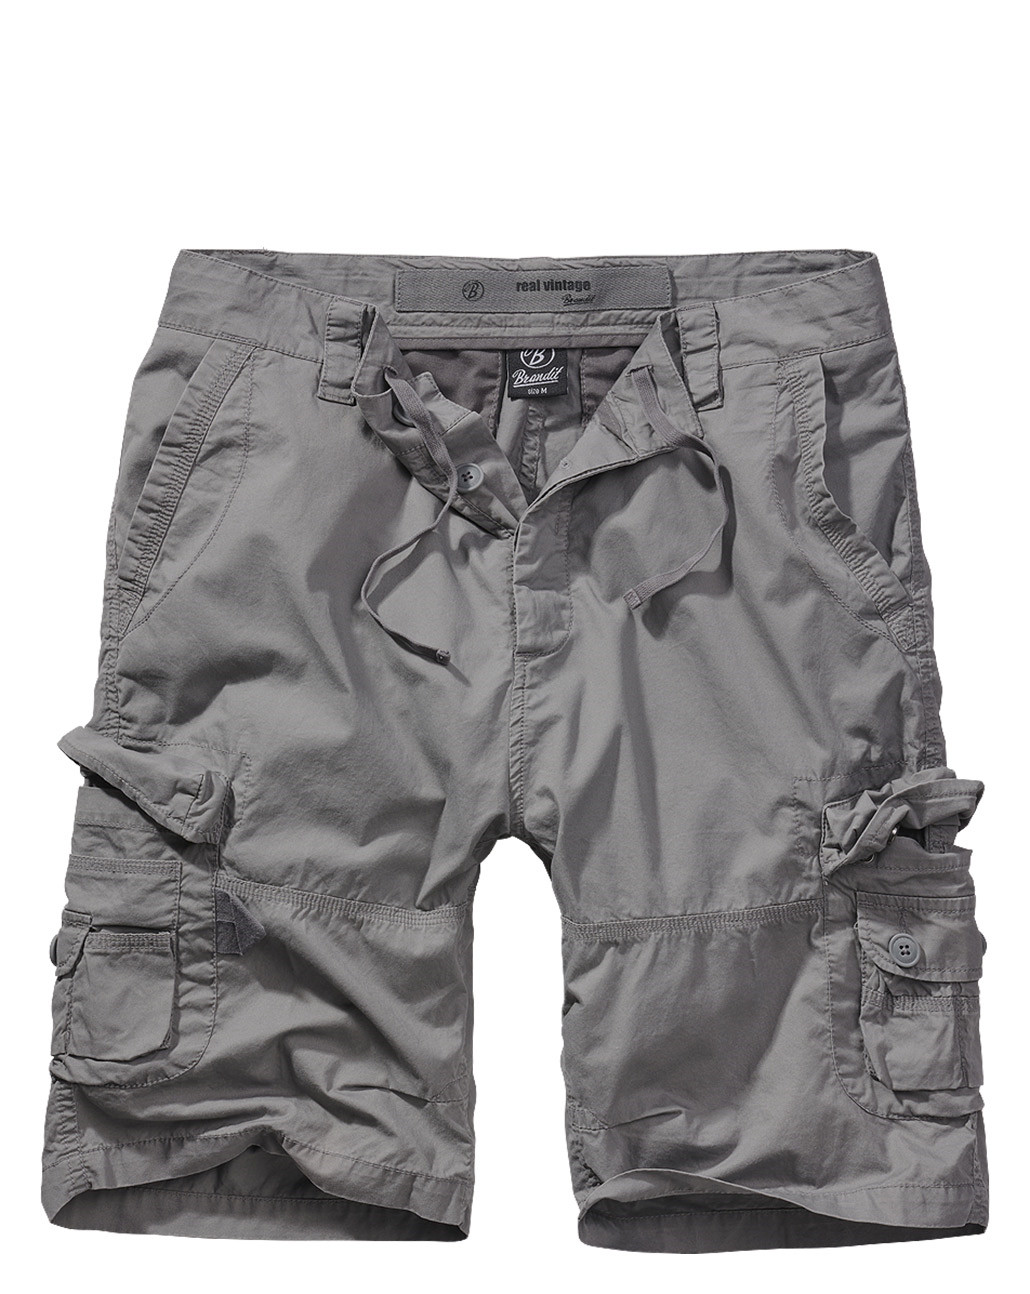 Brandit Ty Shorts (Charcoal, 2XL)